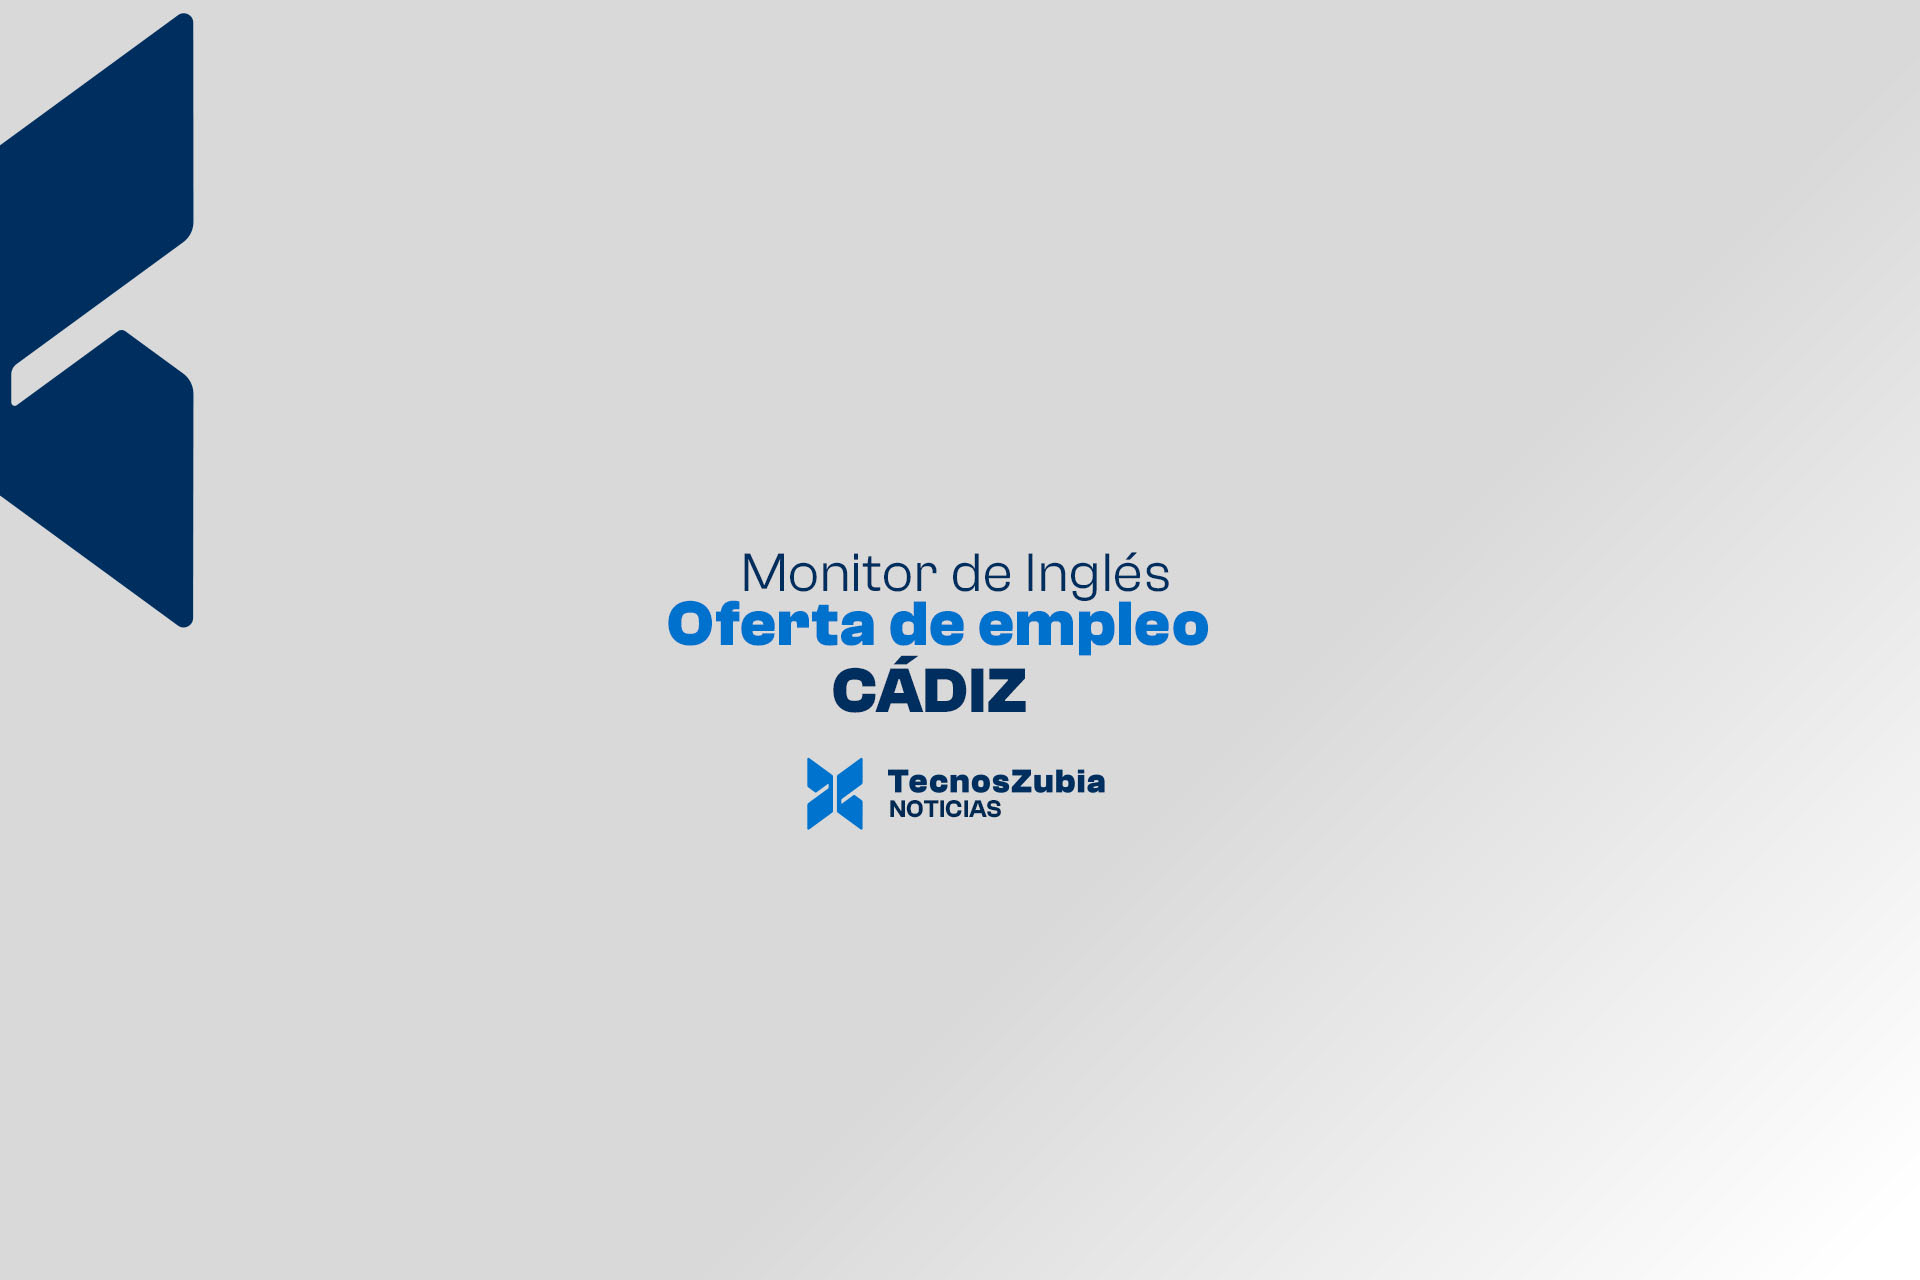 Oferta de empleo Monitor de inglés Cádiz